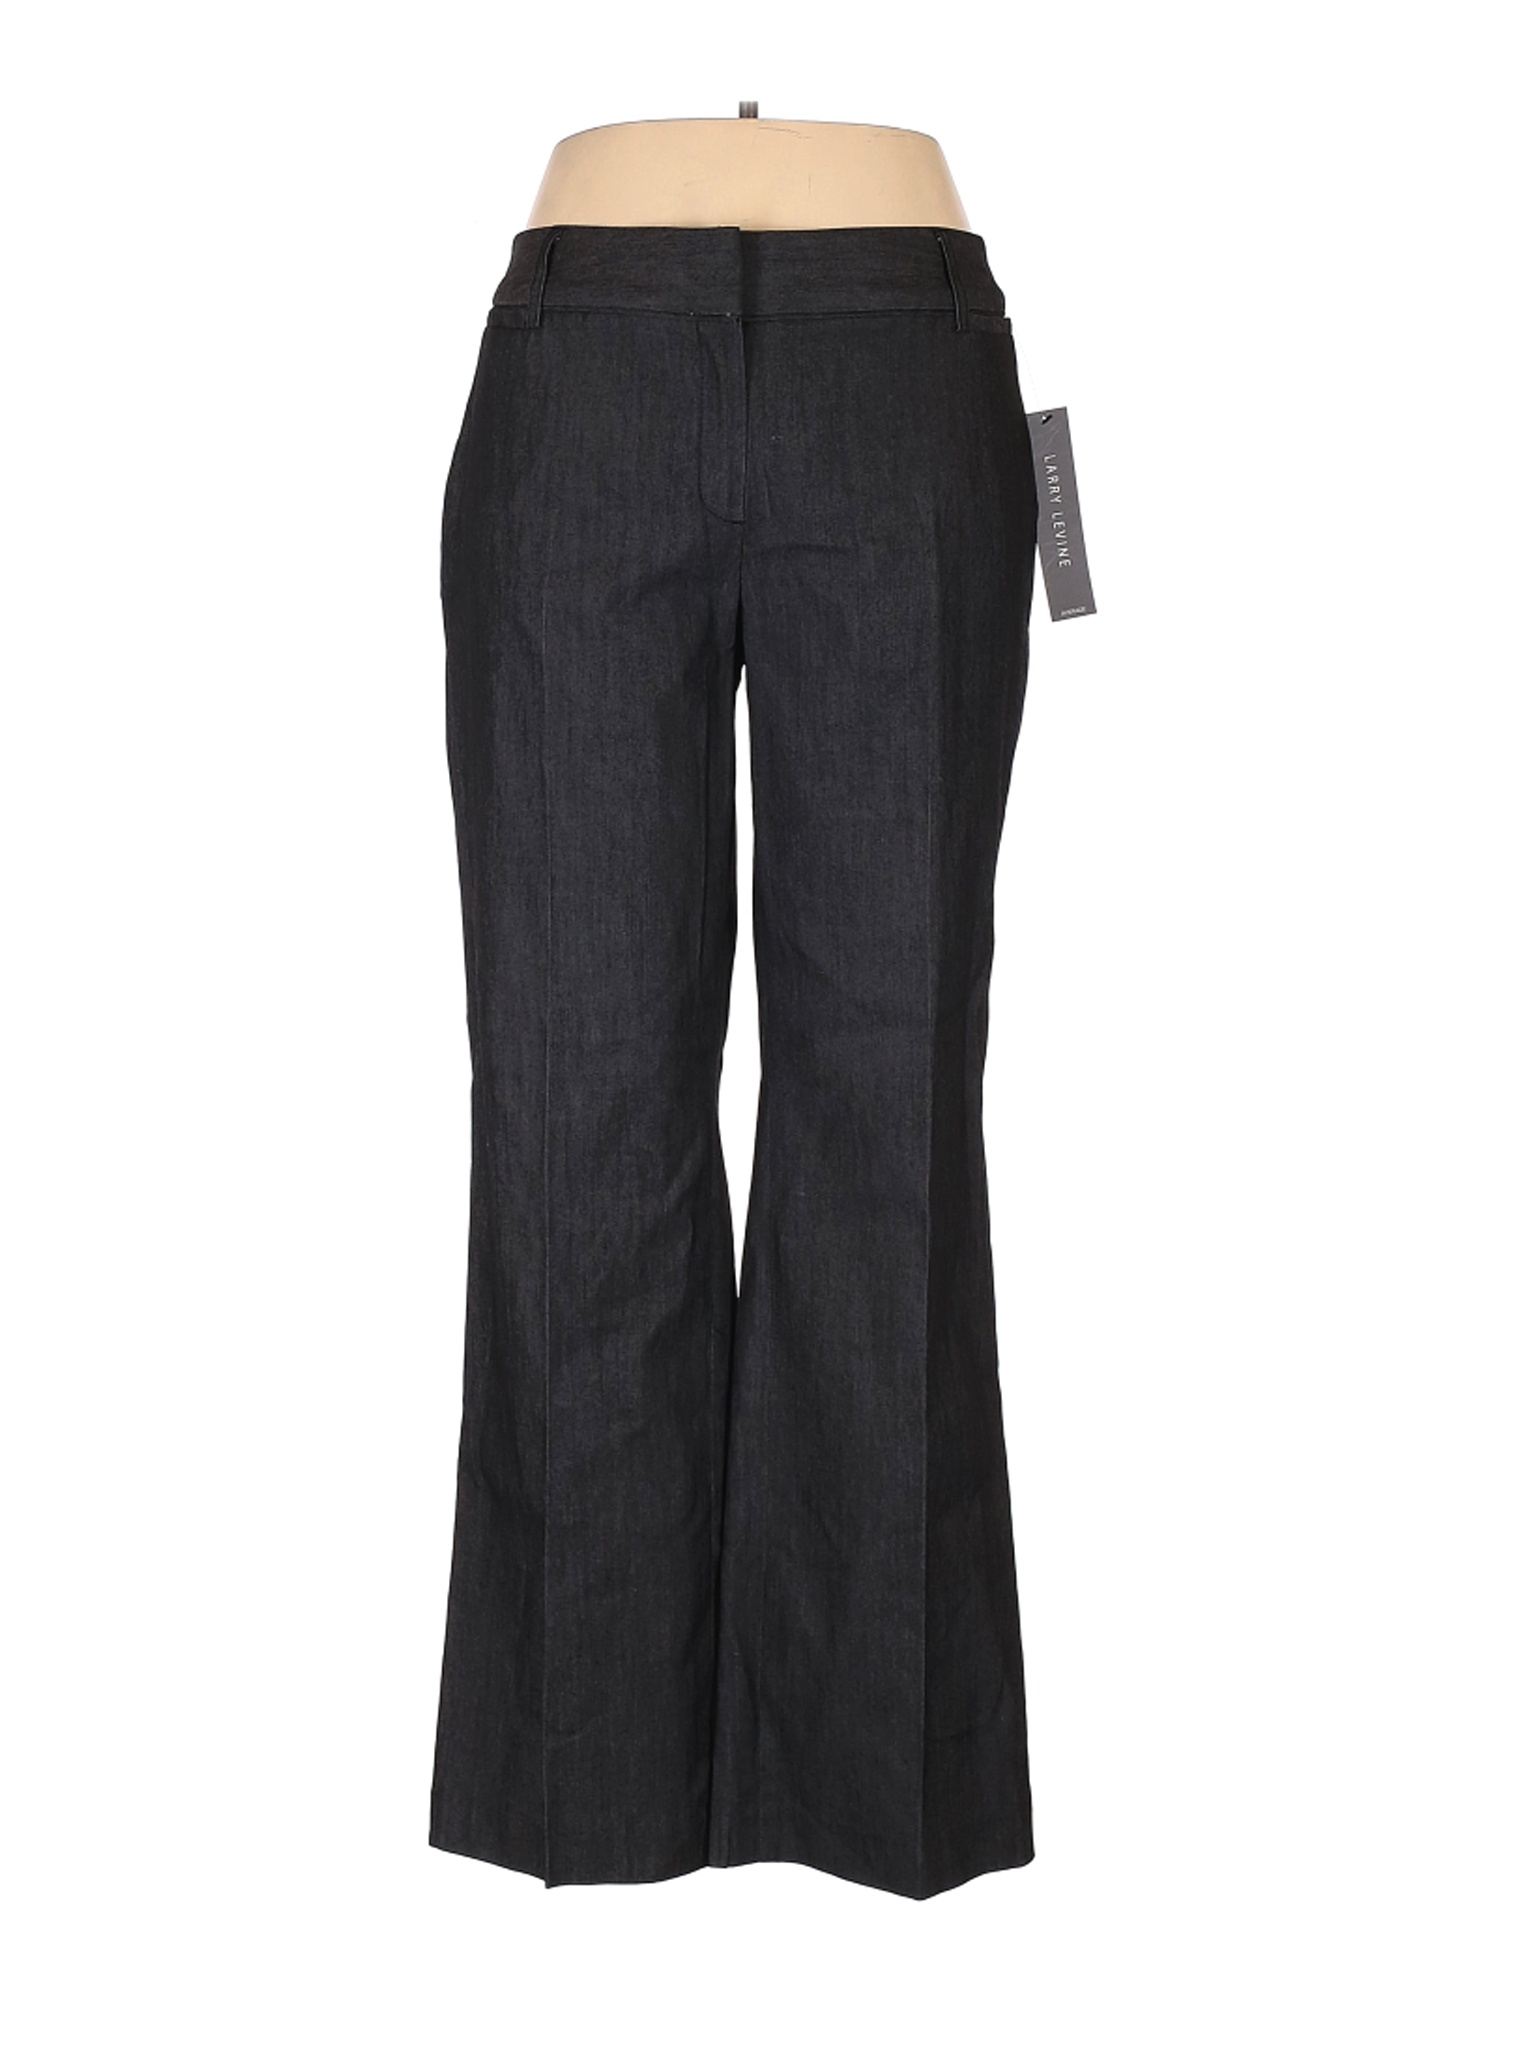 NWT Larry Levine Women Black Dress Pants 14 | eBay